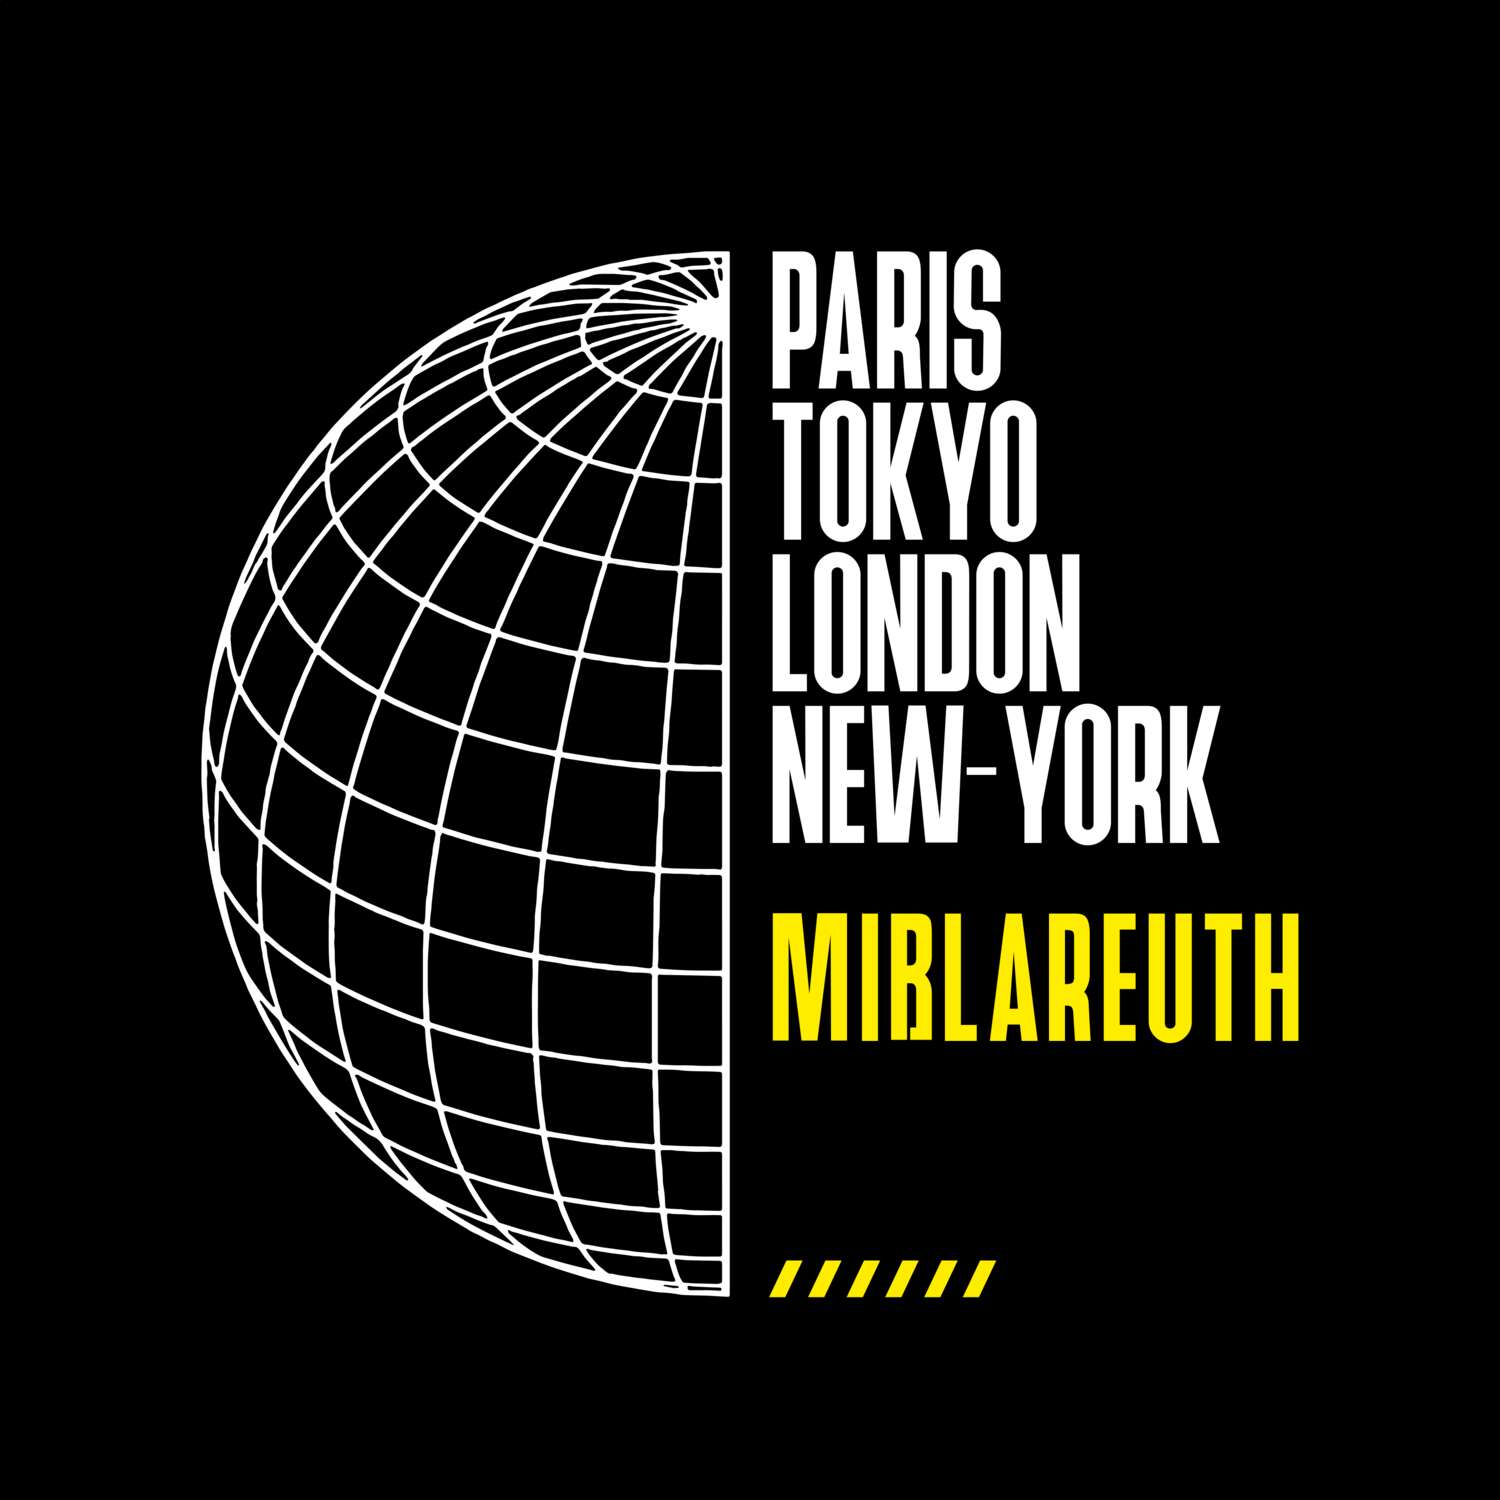 Mißlareuth T-Shirt »Paris Tokyo London«